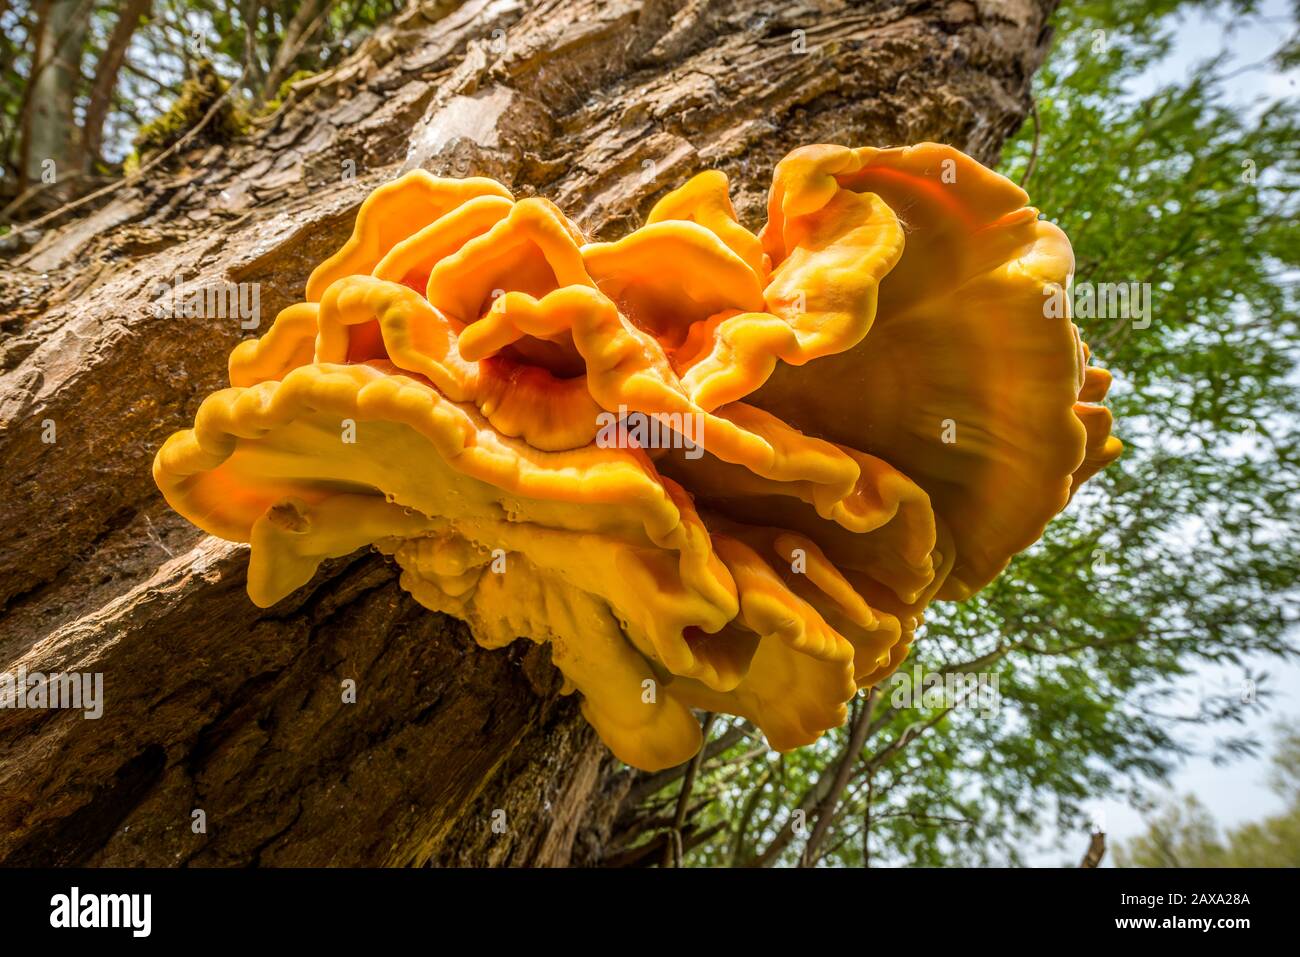 Laetiporus,edible mushrooms,Laetiporus sulphureus,sulphur shelf, chicken of the woods, the chicken mushroom, chicken fungus Stock Photo